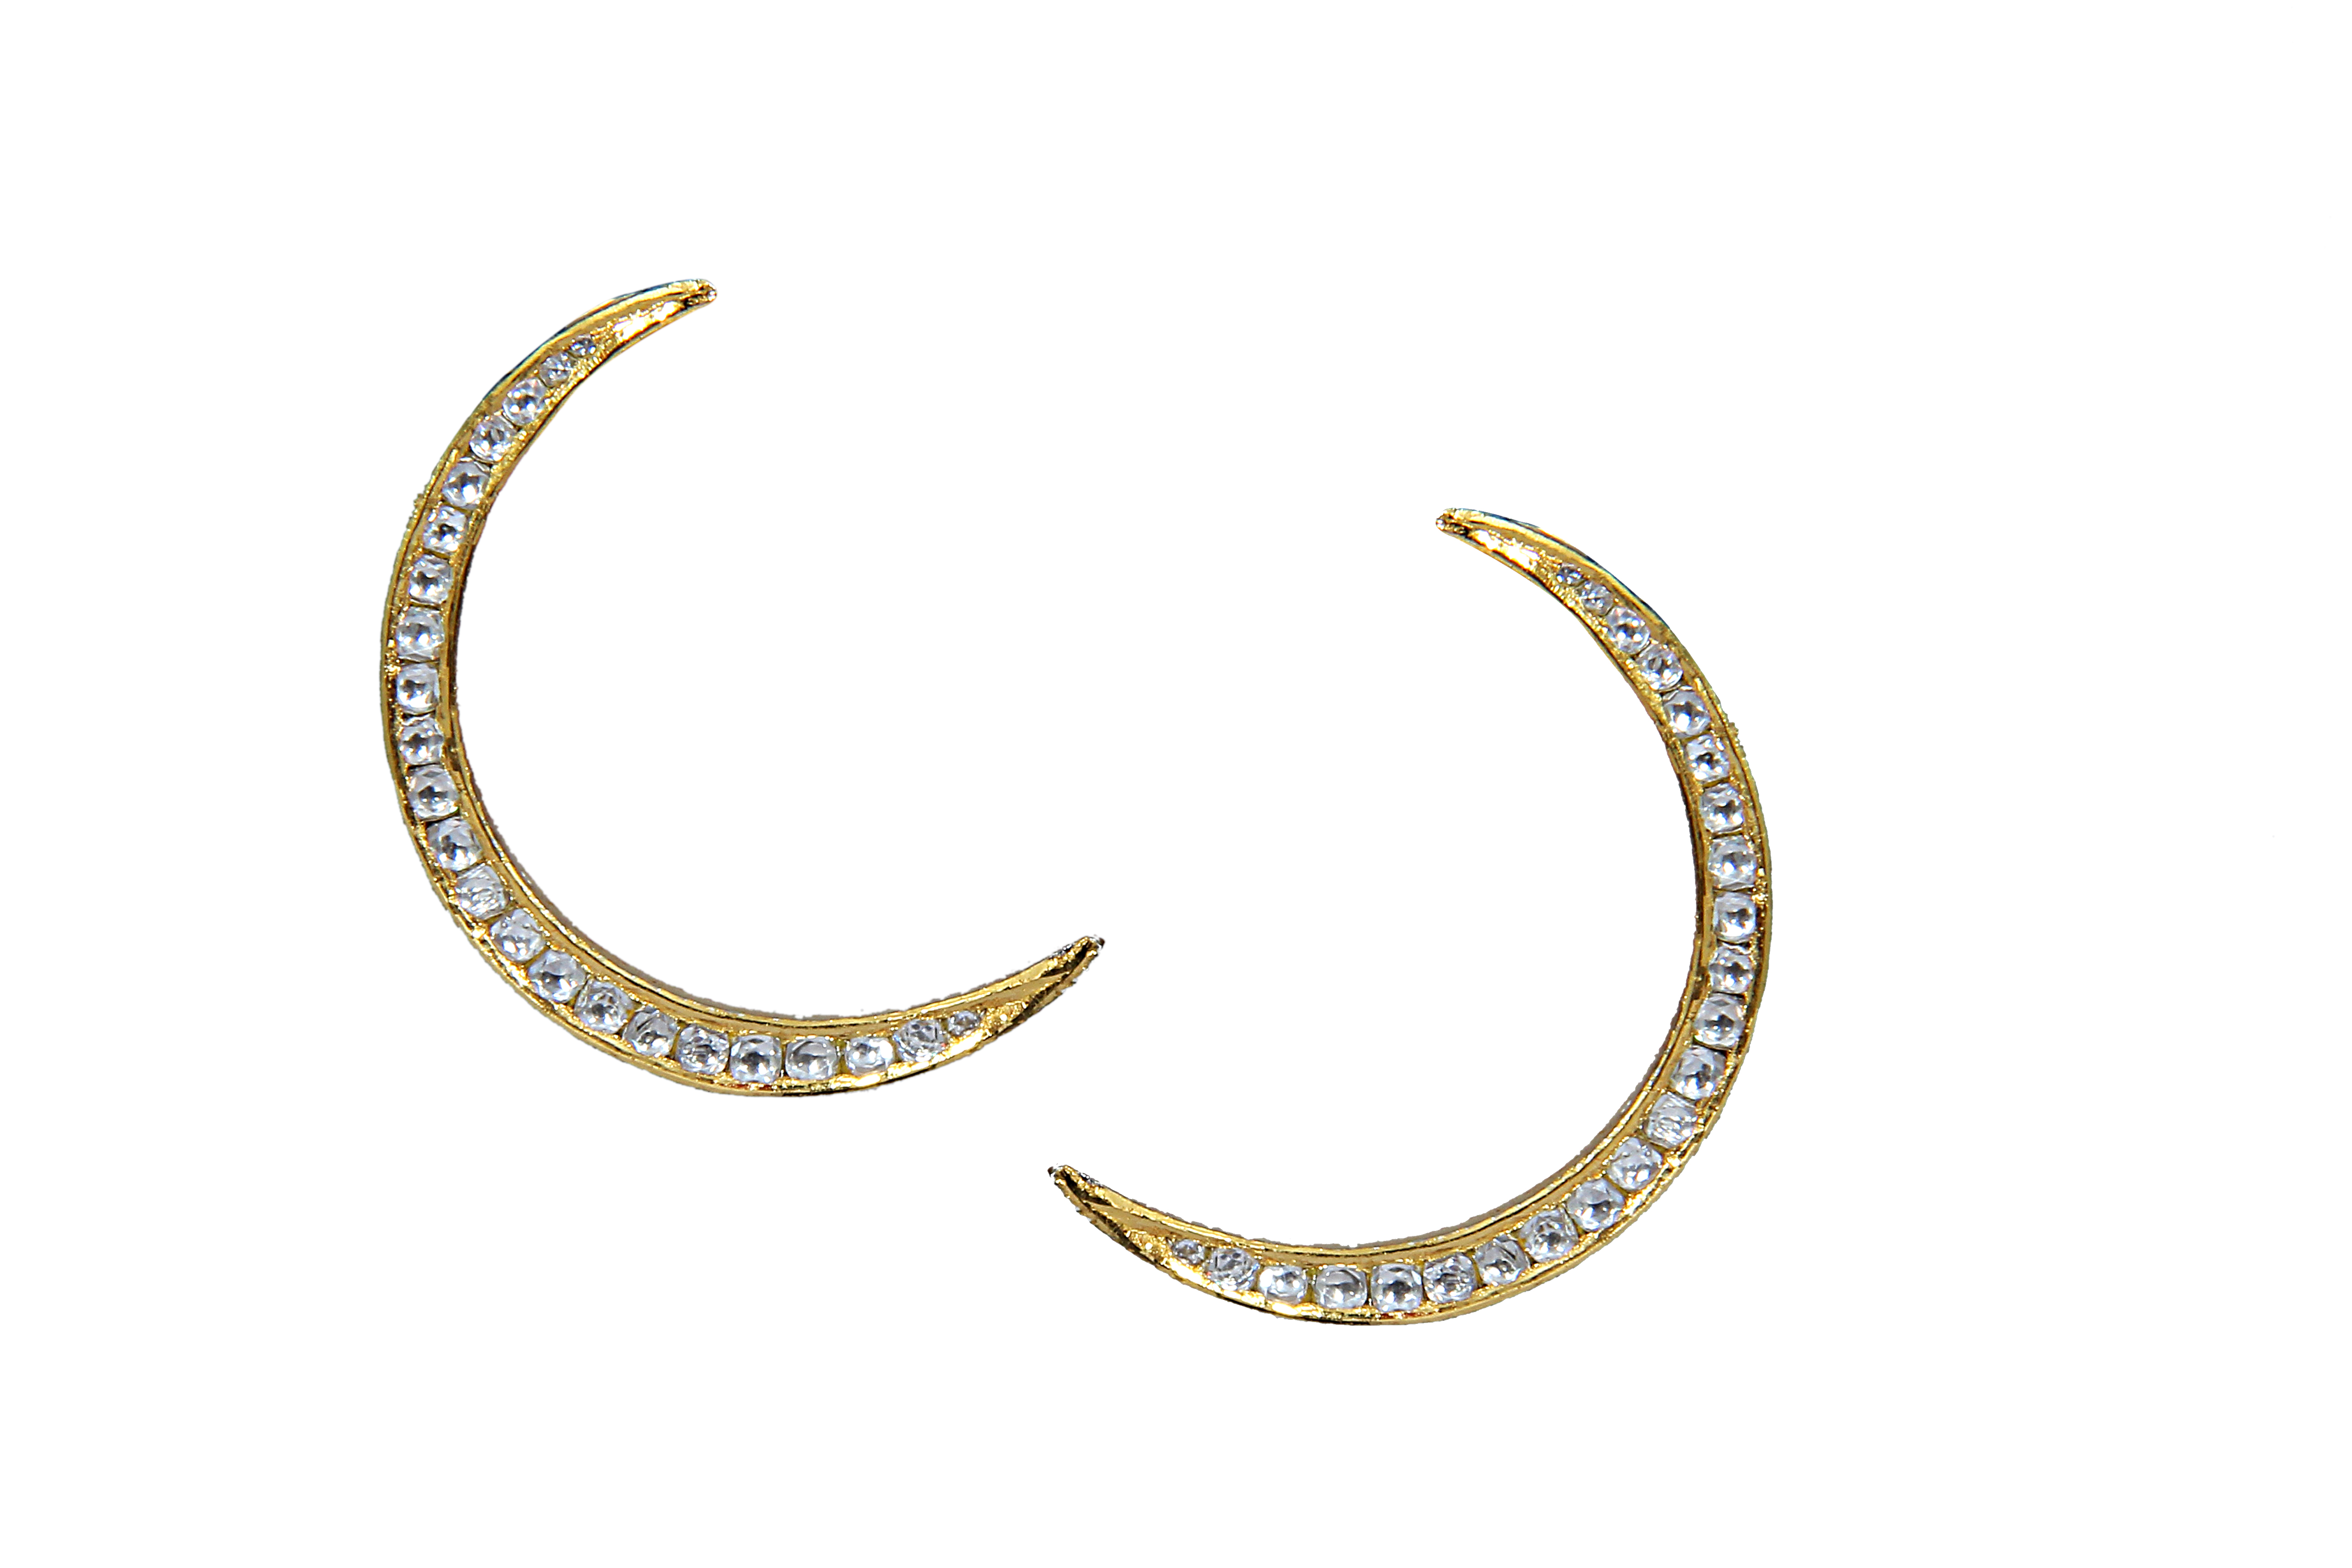 The Hana Crescent Earrings